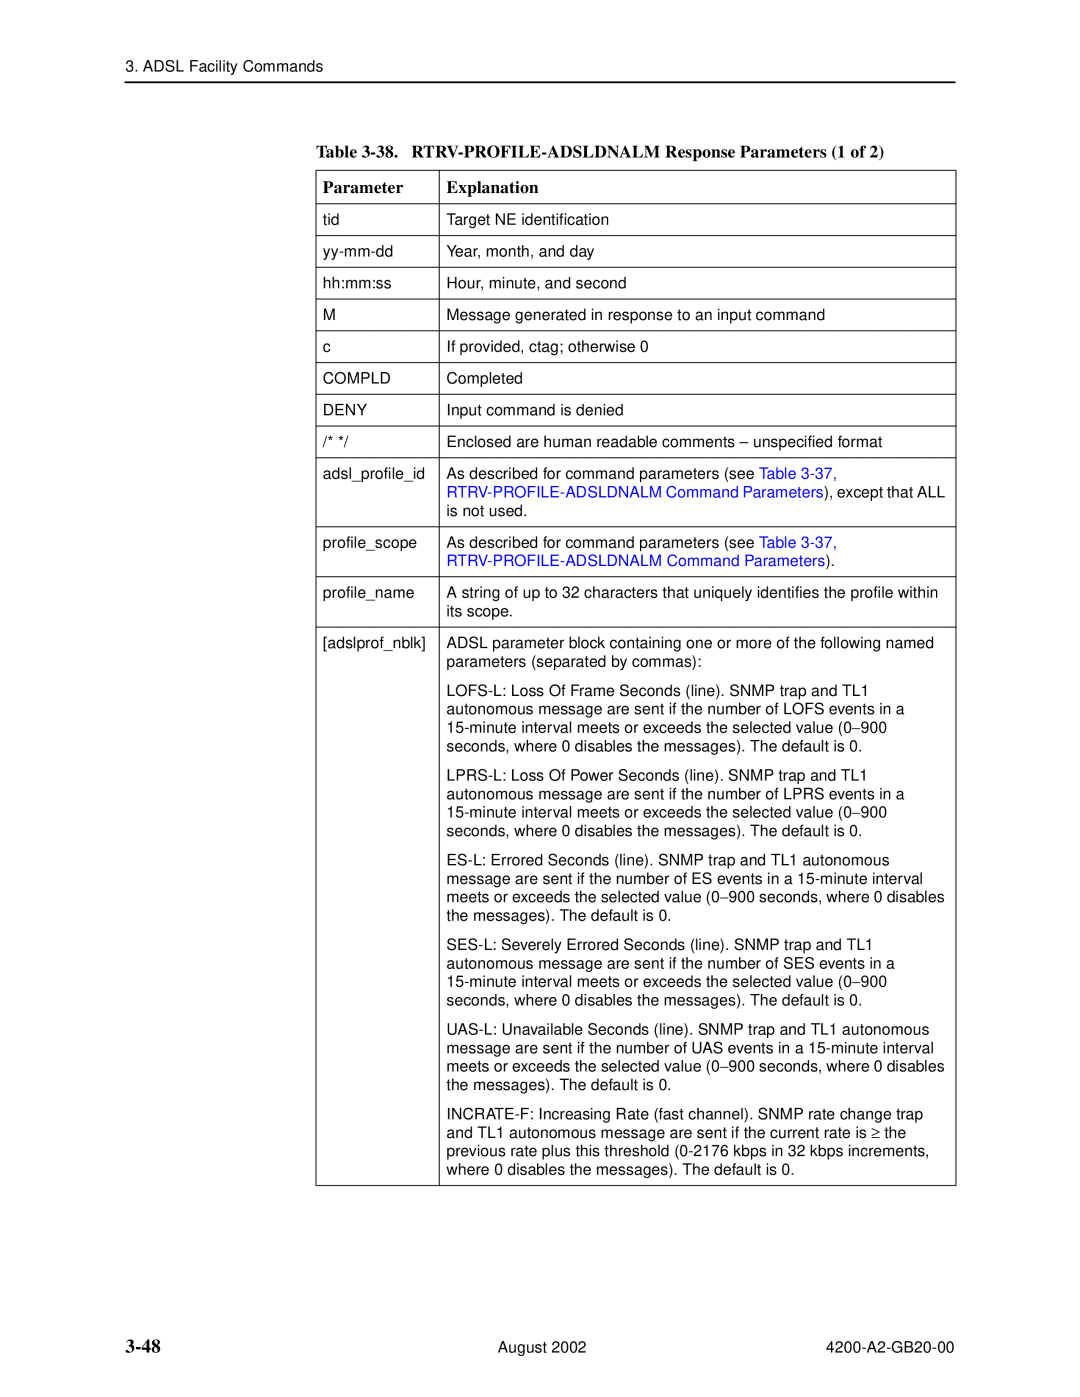 Paradyne 4200 manual 3-48, 38. RTRV-PROFILE-ADSLDNALM Response Parameters 1 of, Explanation 